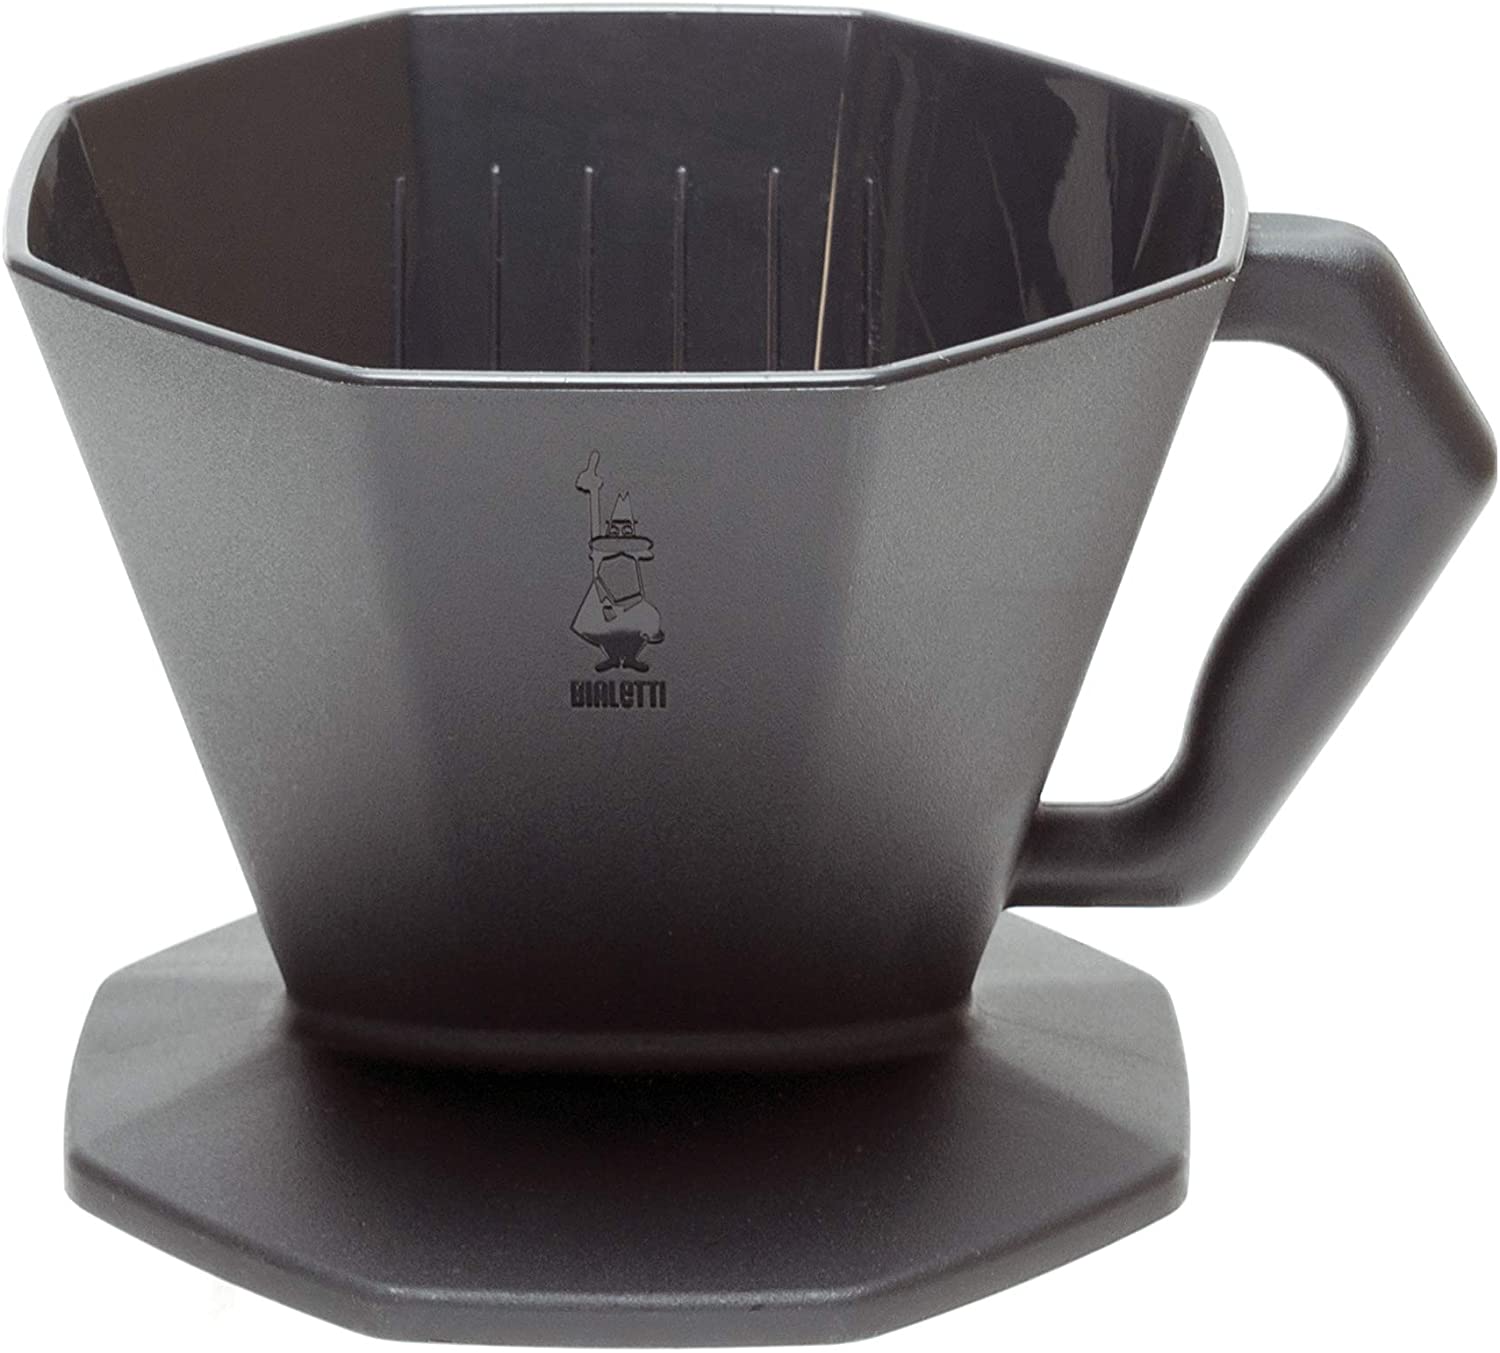 Bialetti Carlo 4913 Coffee Filter for 2 Cups in Plastic, Black, 30 x 20 x 15 cm